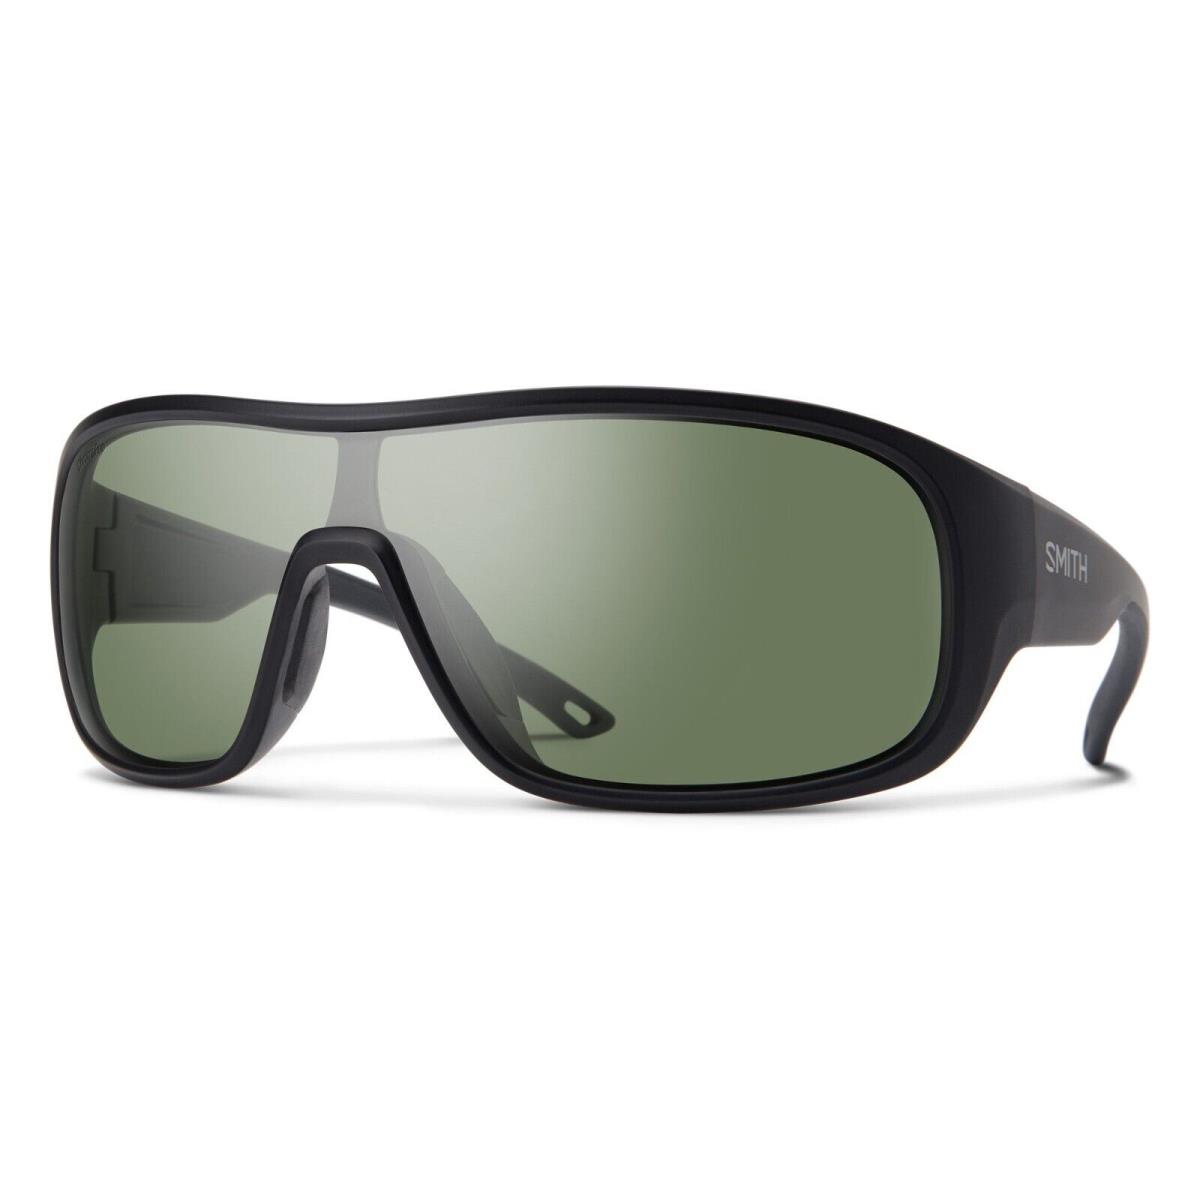 Smith Men`s Women`s Spinner Choromapop Polarized Sport Performance Sunglasses ChromaPop Polarized Gray Green